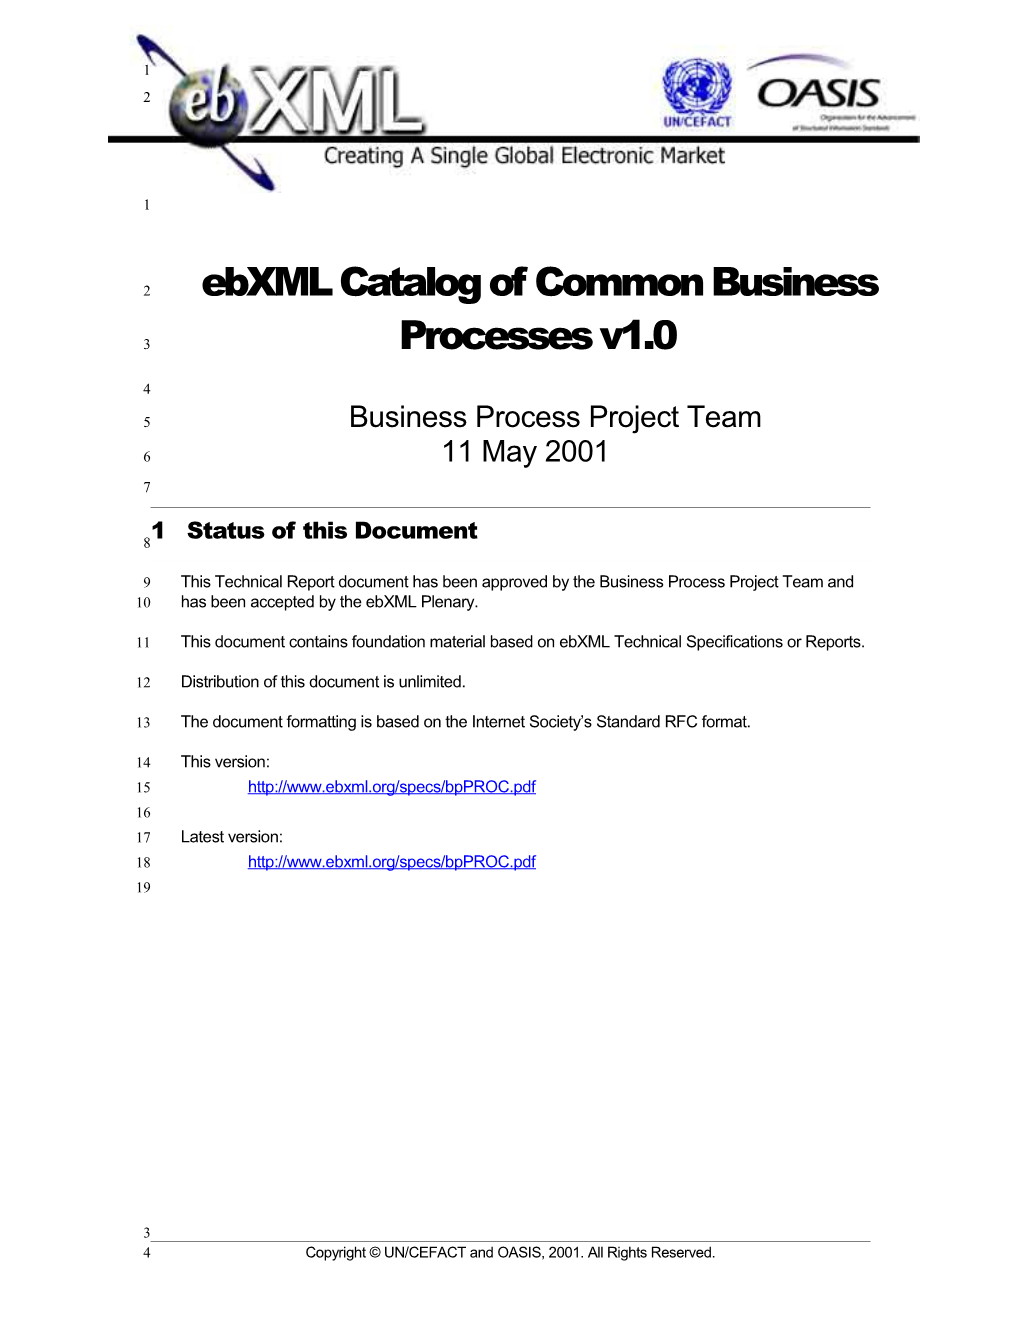 Ebxml Catalog of Common Business Processes V1.0